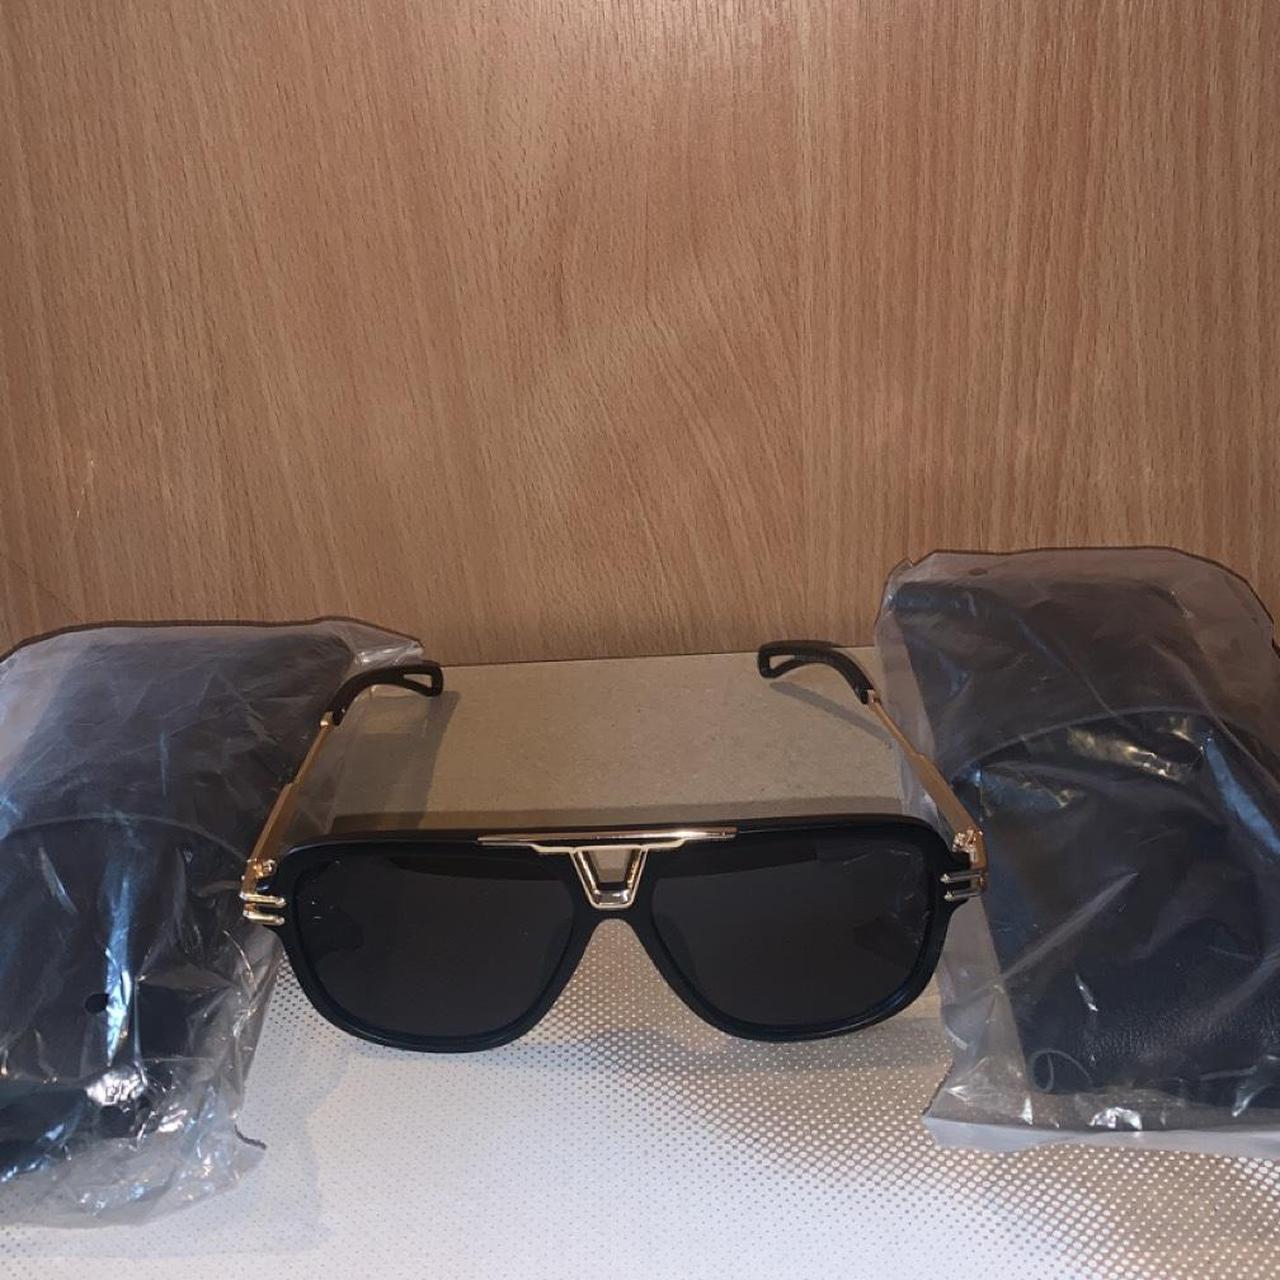 Brand New Aviator Sunglasses Black and Gold - Depop